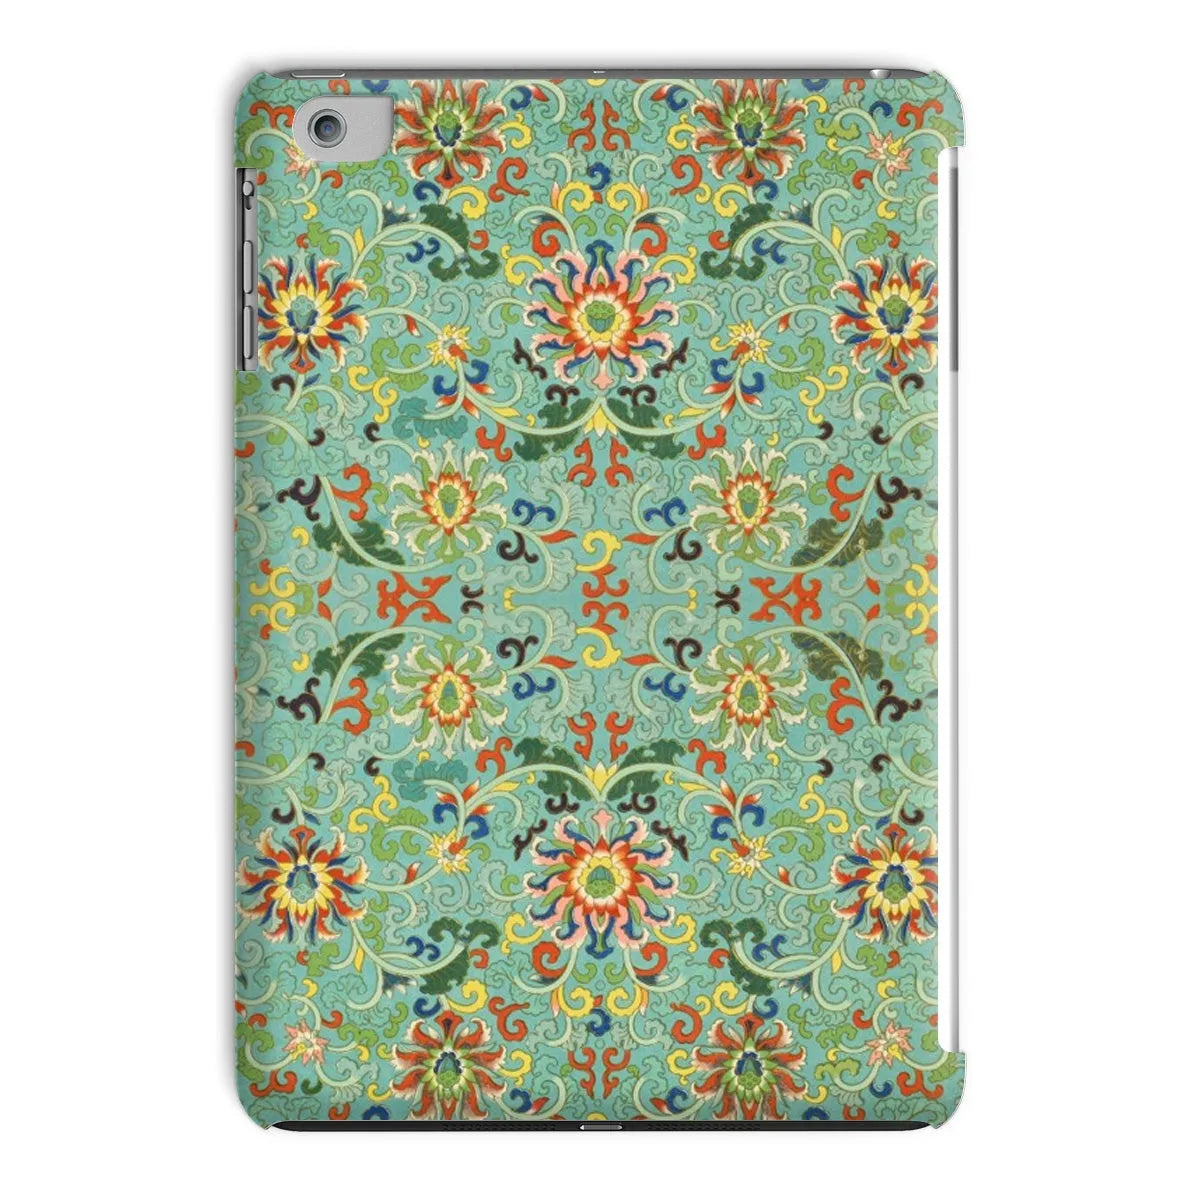 Lotus Candy Tablet Cases - Ipad Mini 1/2/3 - Aesthetic Art